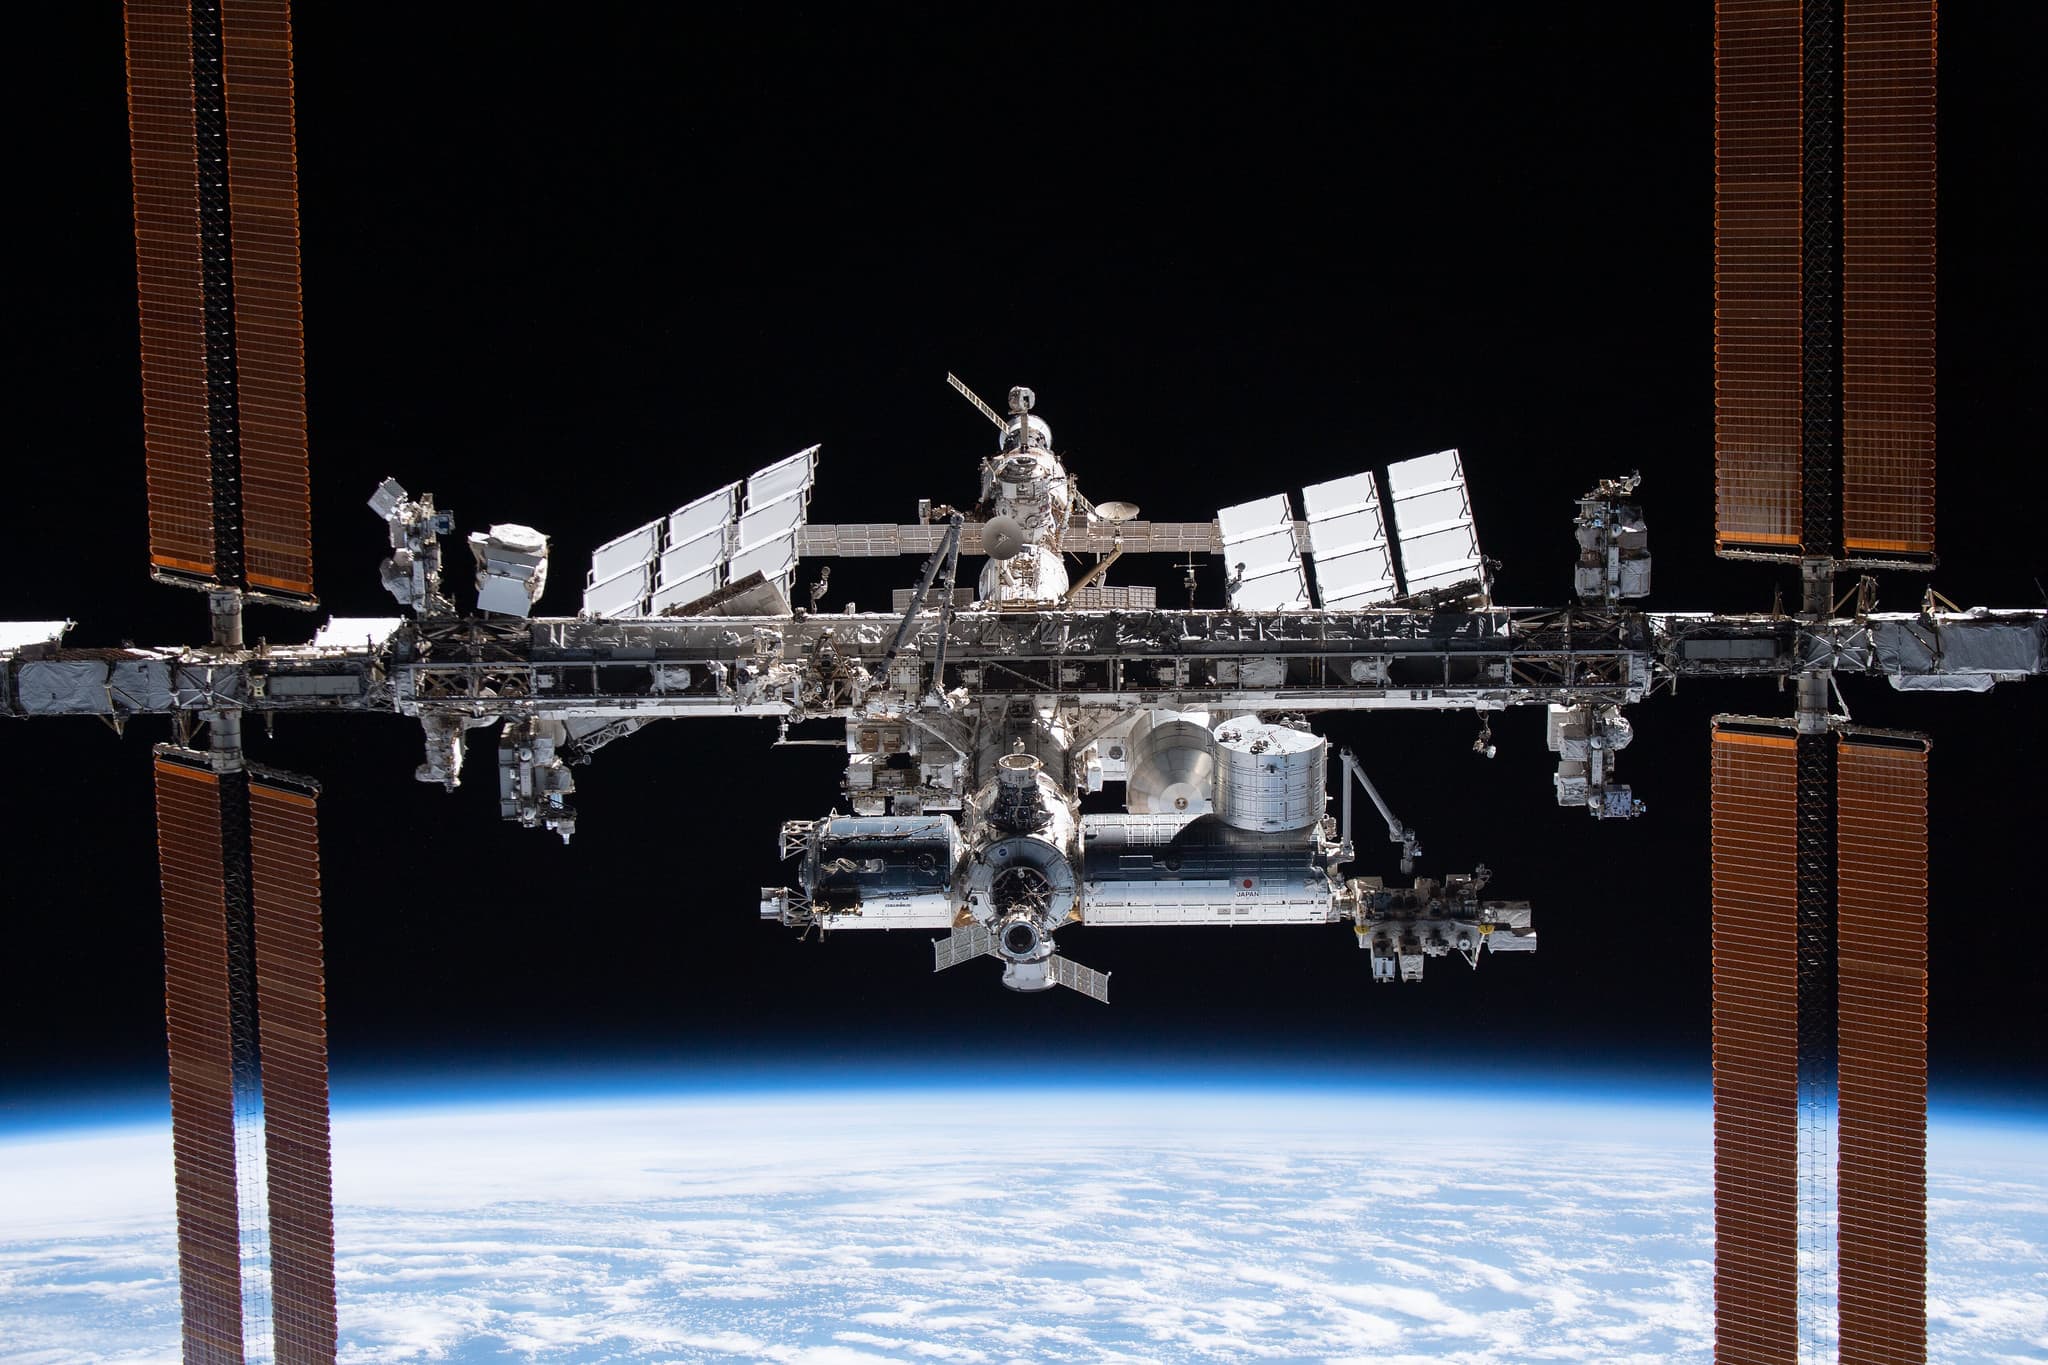 NASA: ISS partnership with Russia 'working' despite Ukraine conflict